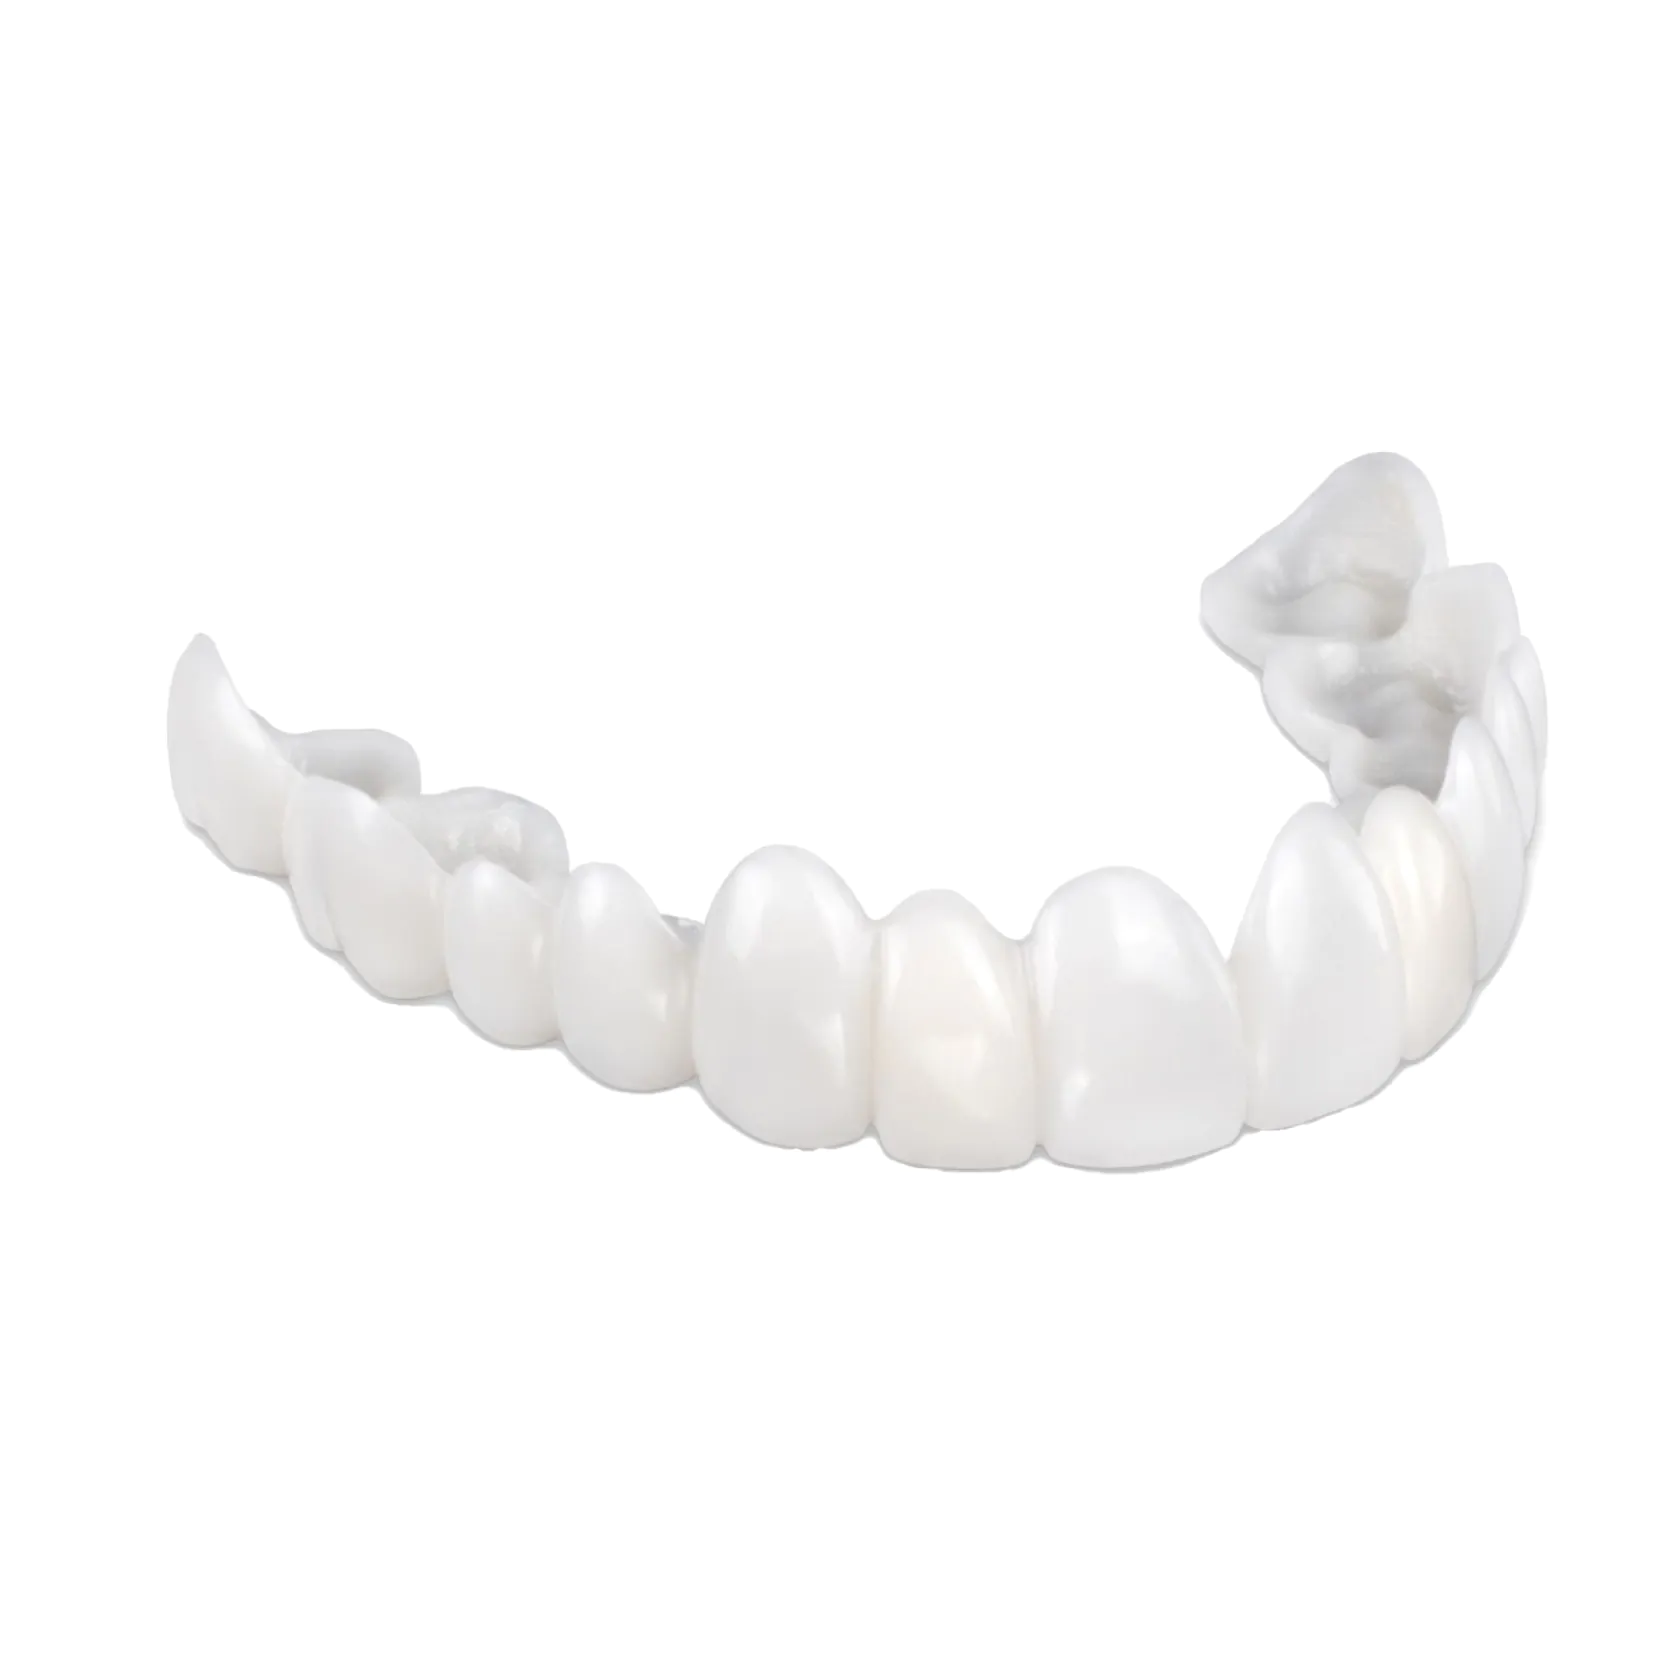 GlorySmile custom made teeth whitening trays Supply